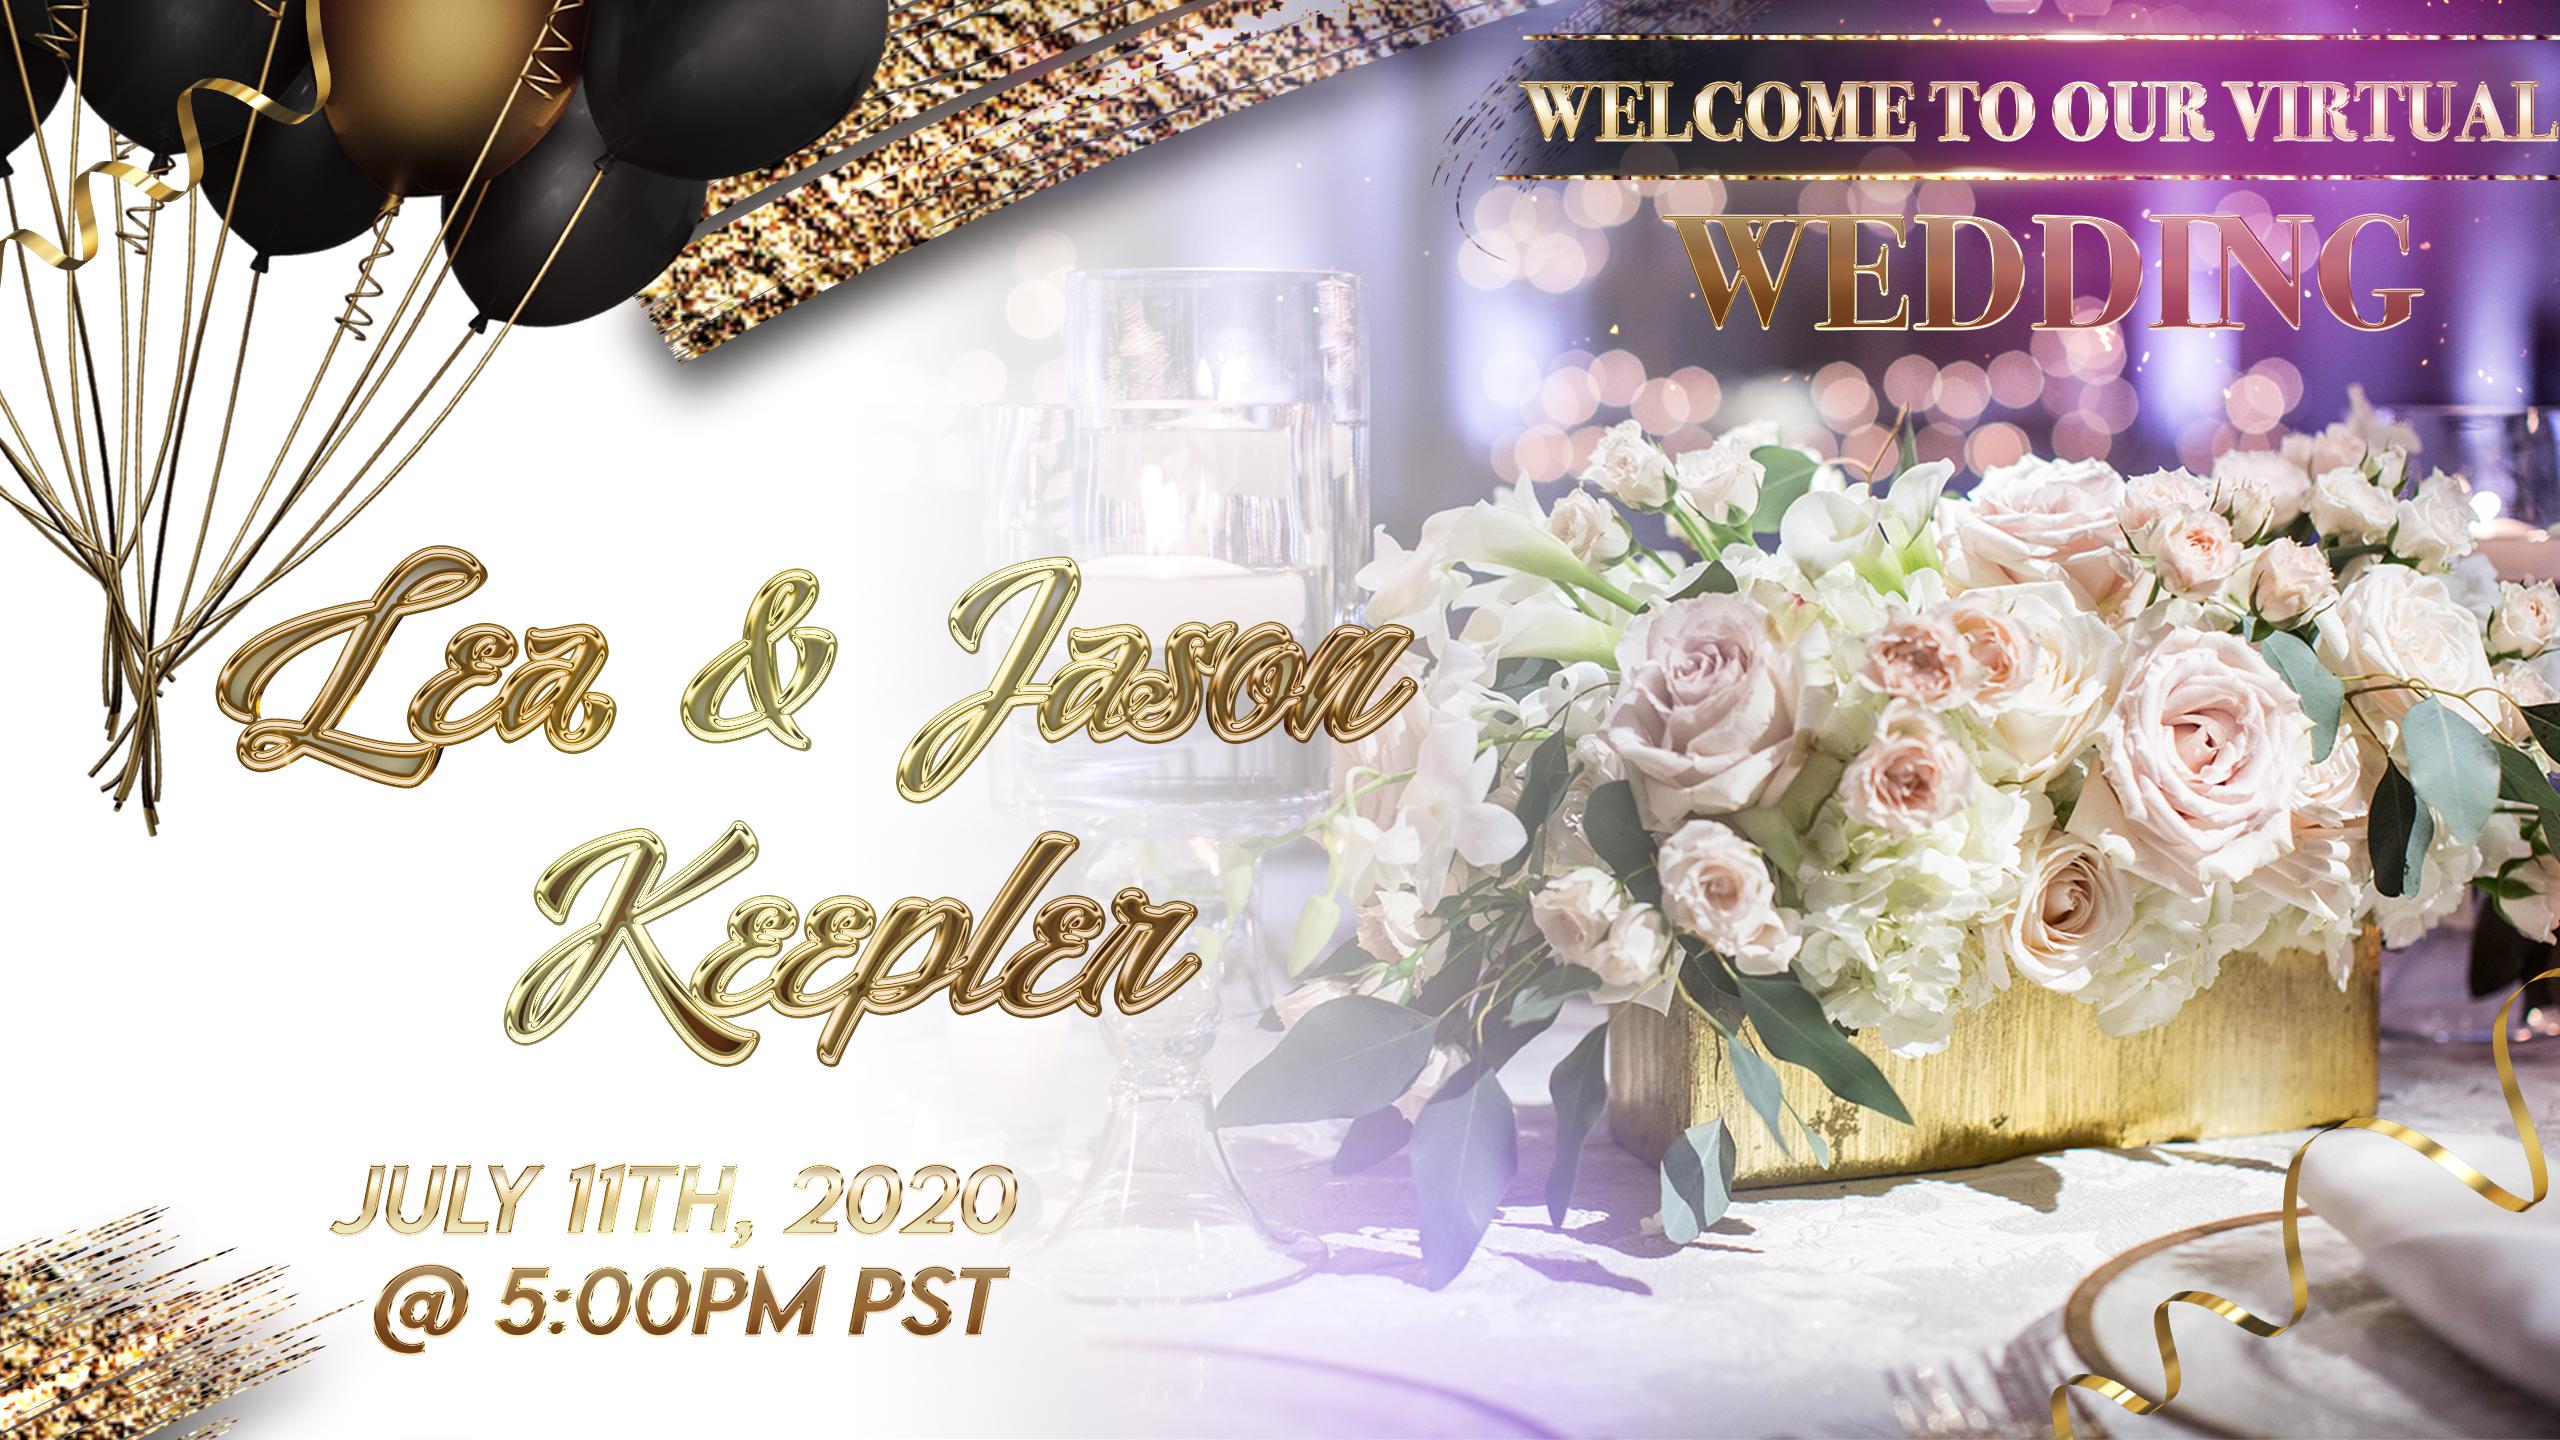 The Wedding Website of Jason Keepler and Lea Zesati